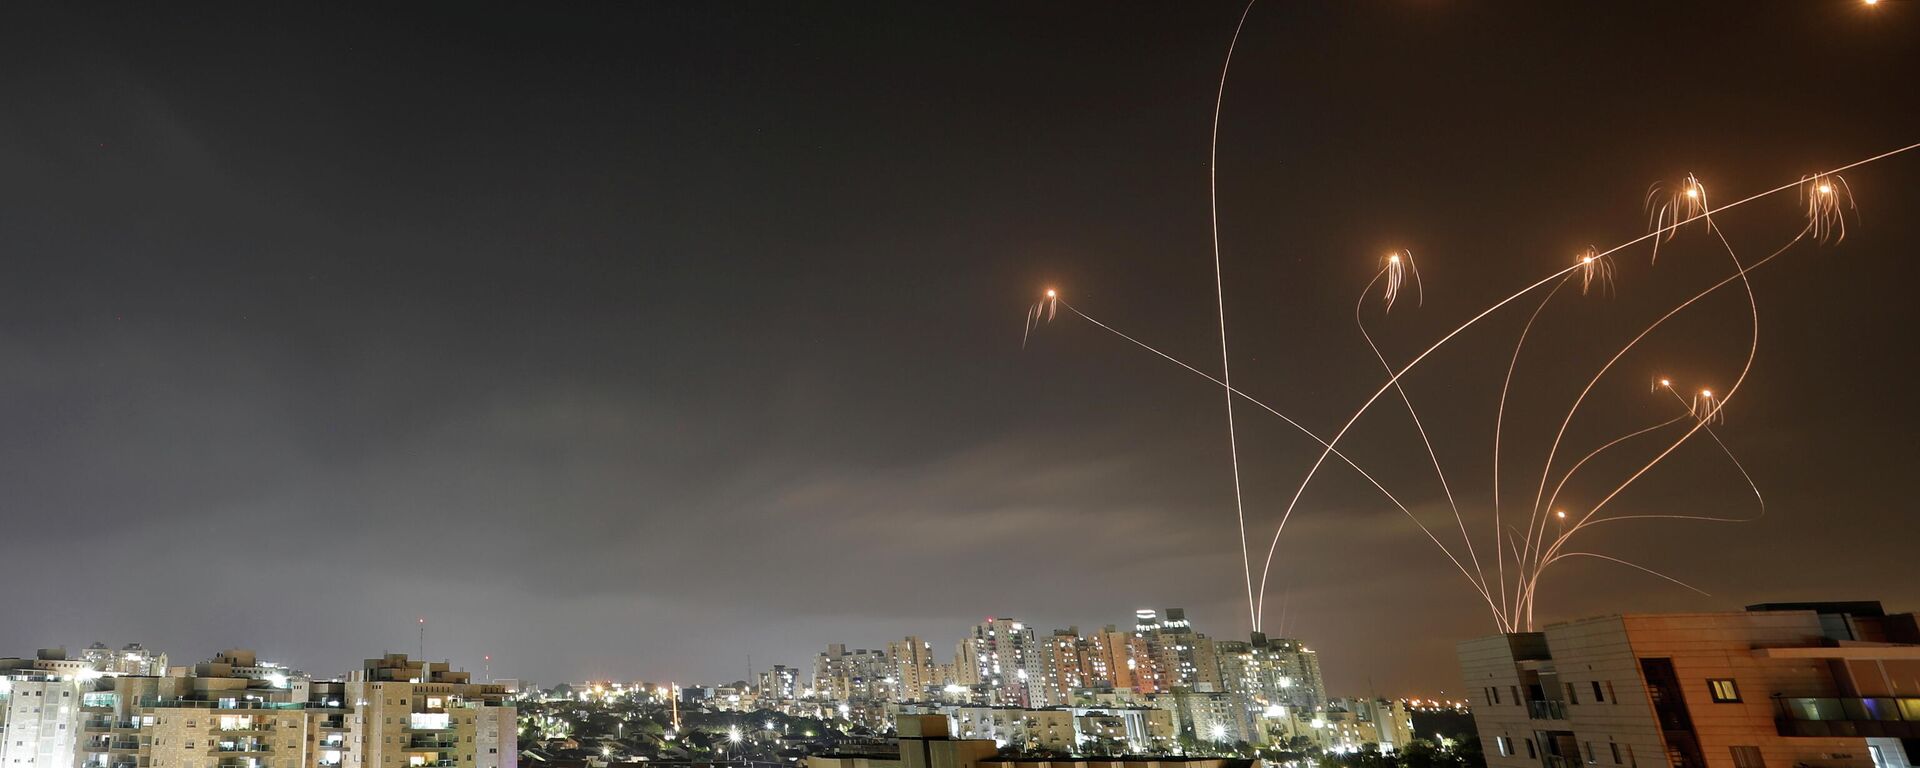 La Cúpula de Hierro israelí intercepta misiles lanzados desde Gaza - Sputnik Mundo, 1920, 10.05.2021